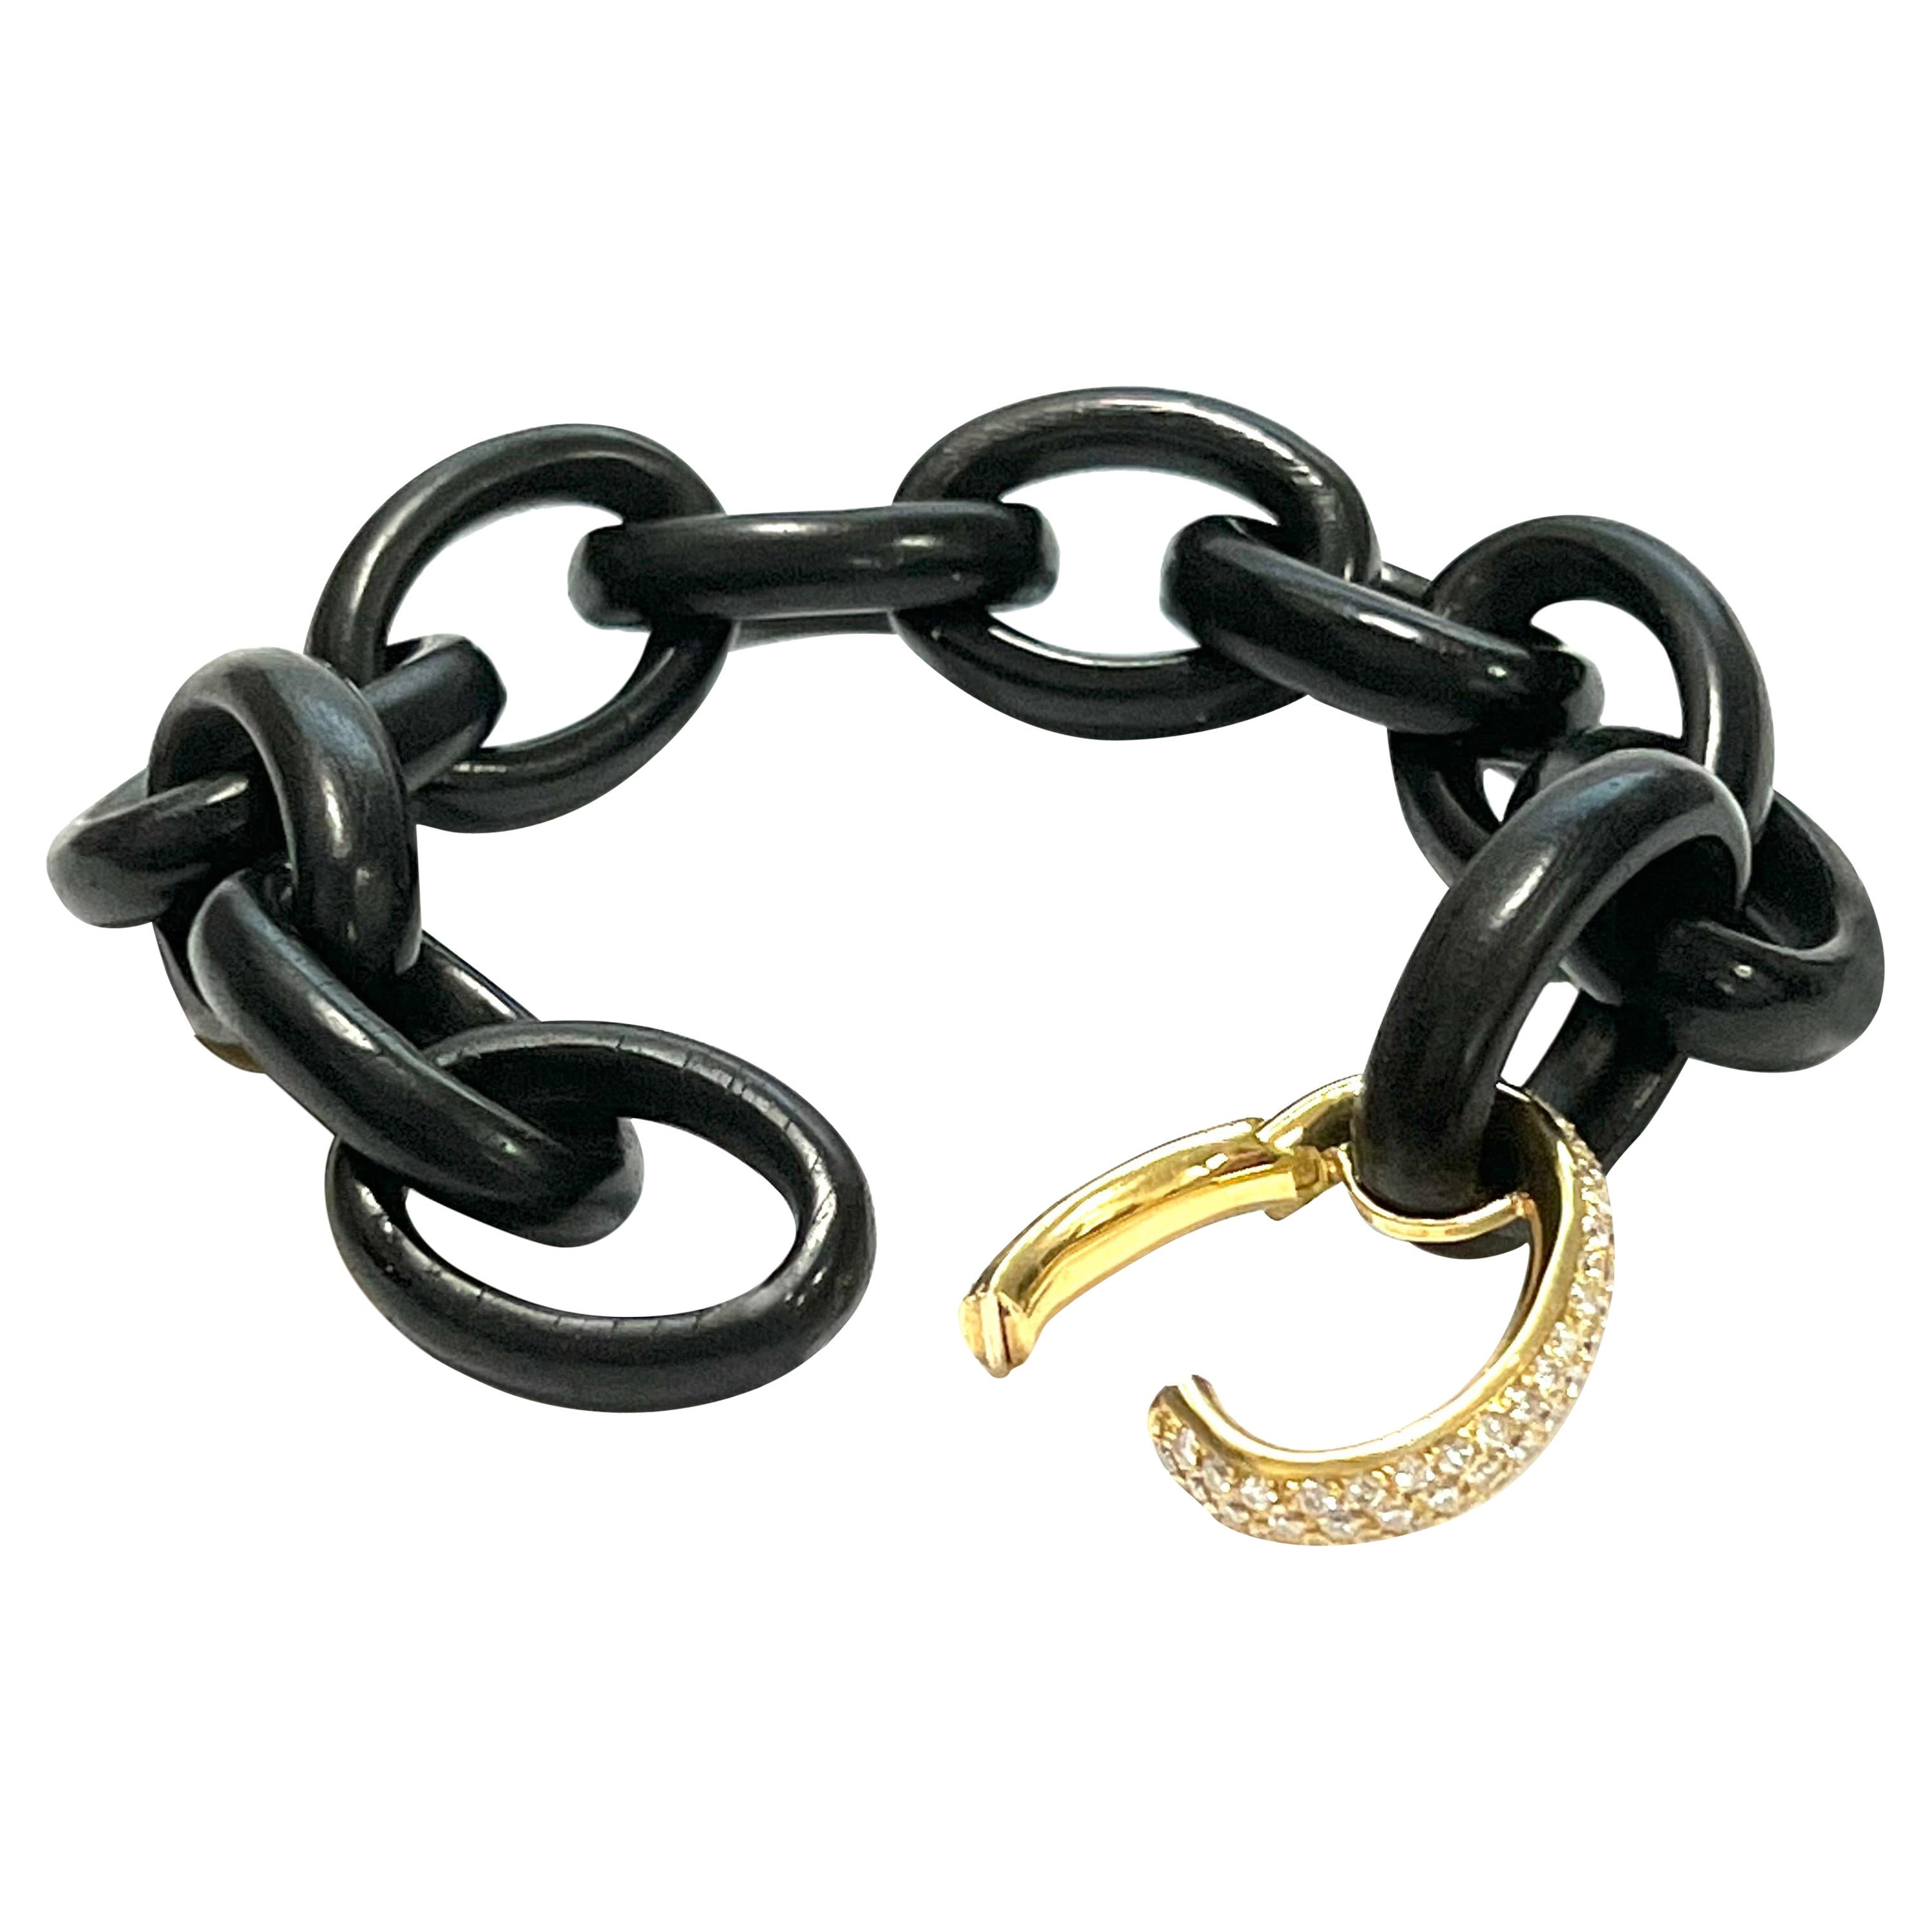 Bracelet in Ebony Links with 18k Yellow Gold and Diamond Clasp